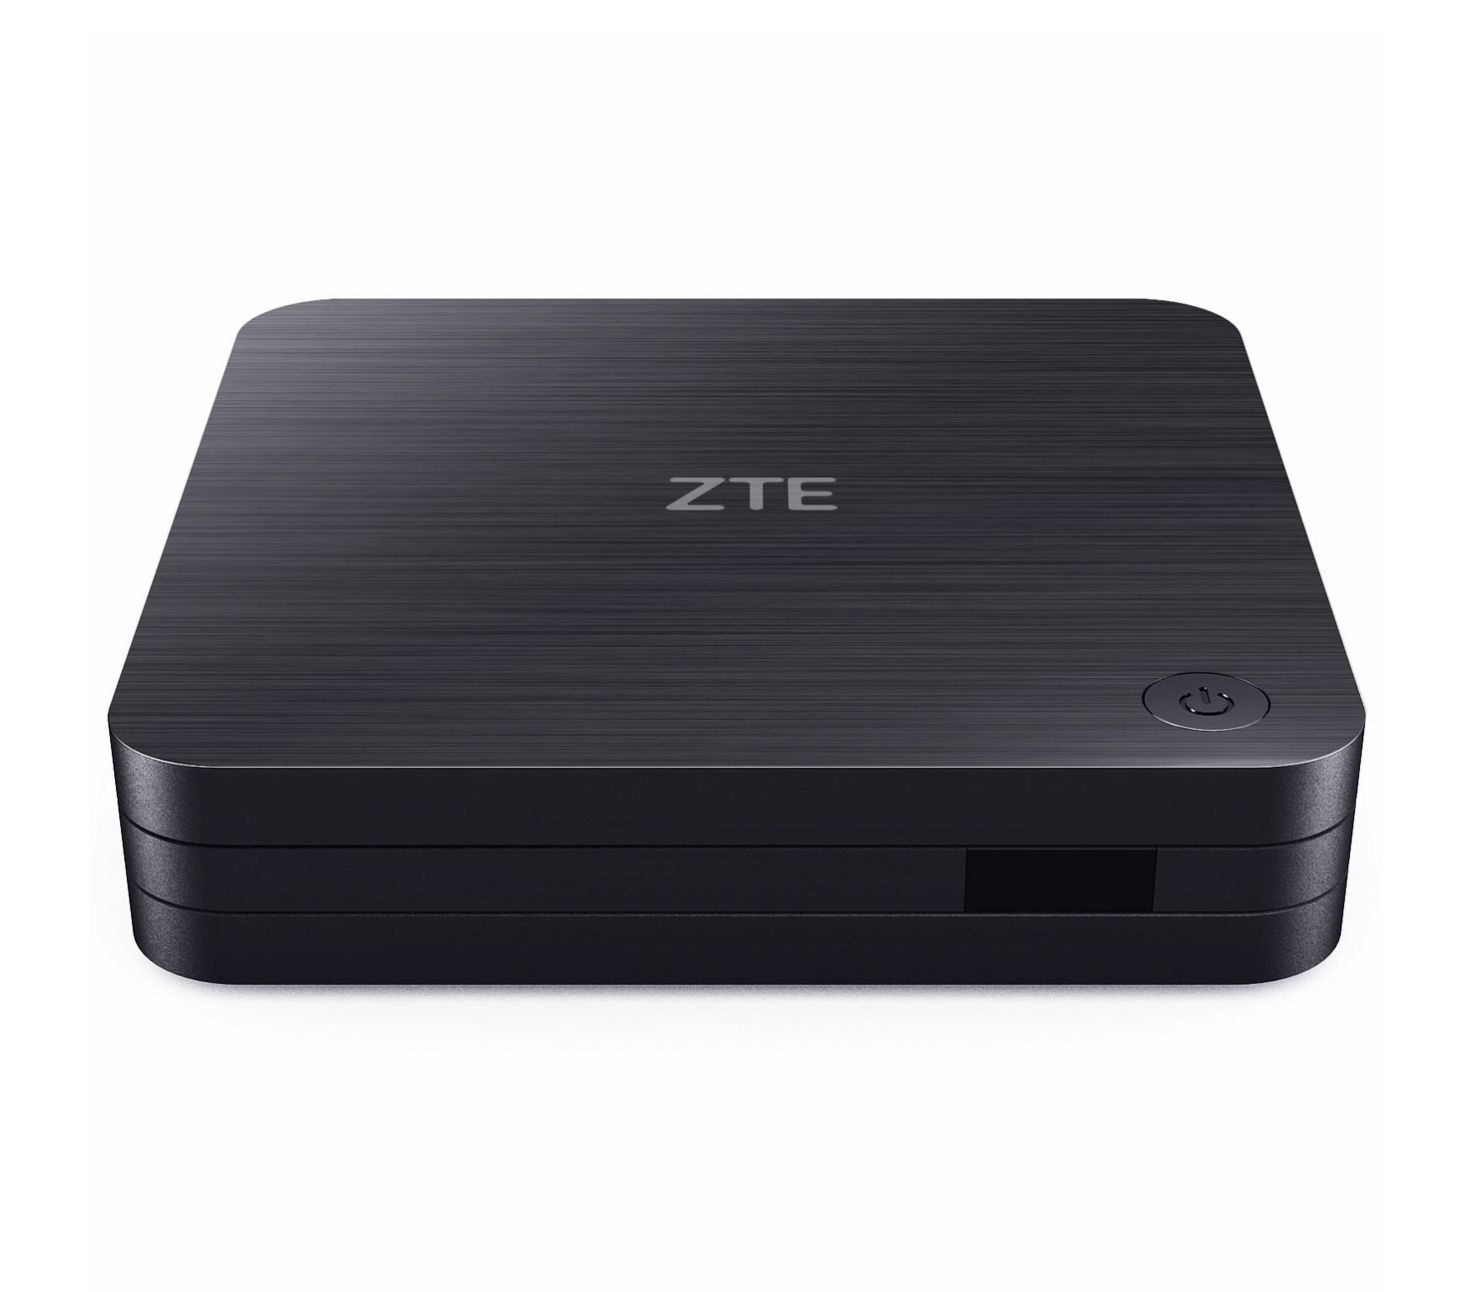 Андроид тв приставка iptv. ZTE zxv10 b866. Приставка МТС ZTE zxv10 b866. ZTE медиаплеер ZTE zxv10 b866. ZTE zxv10 b866 IPTV ТВ-приставка.